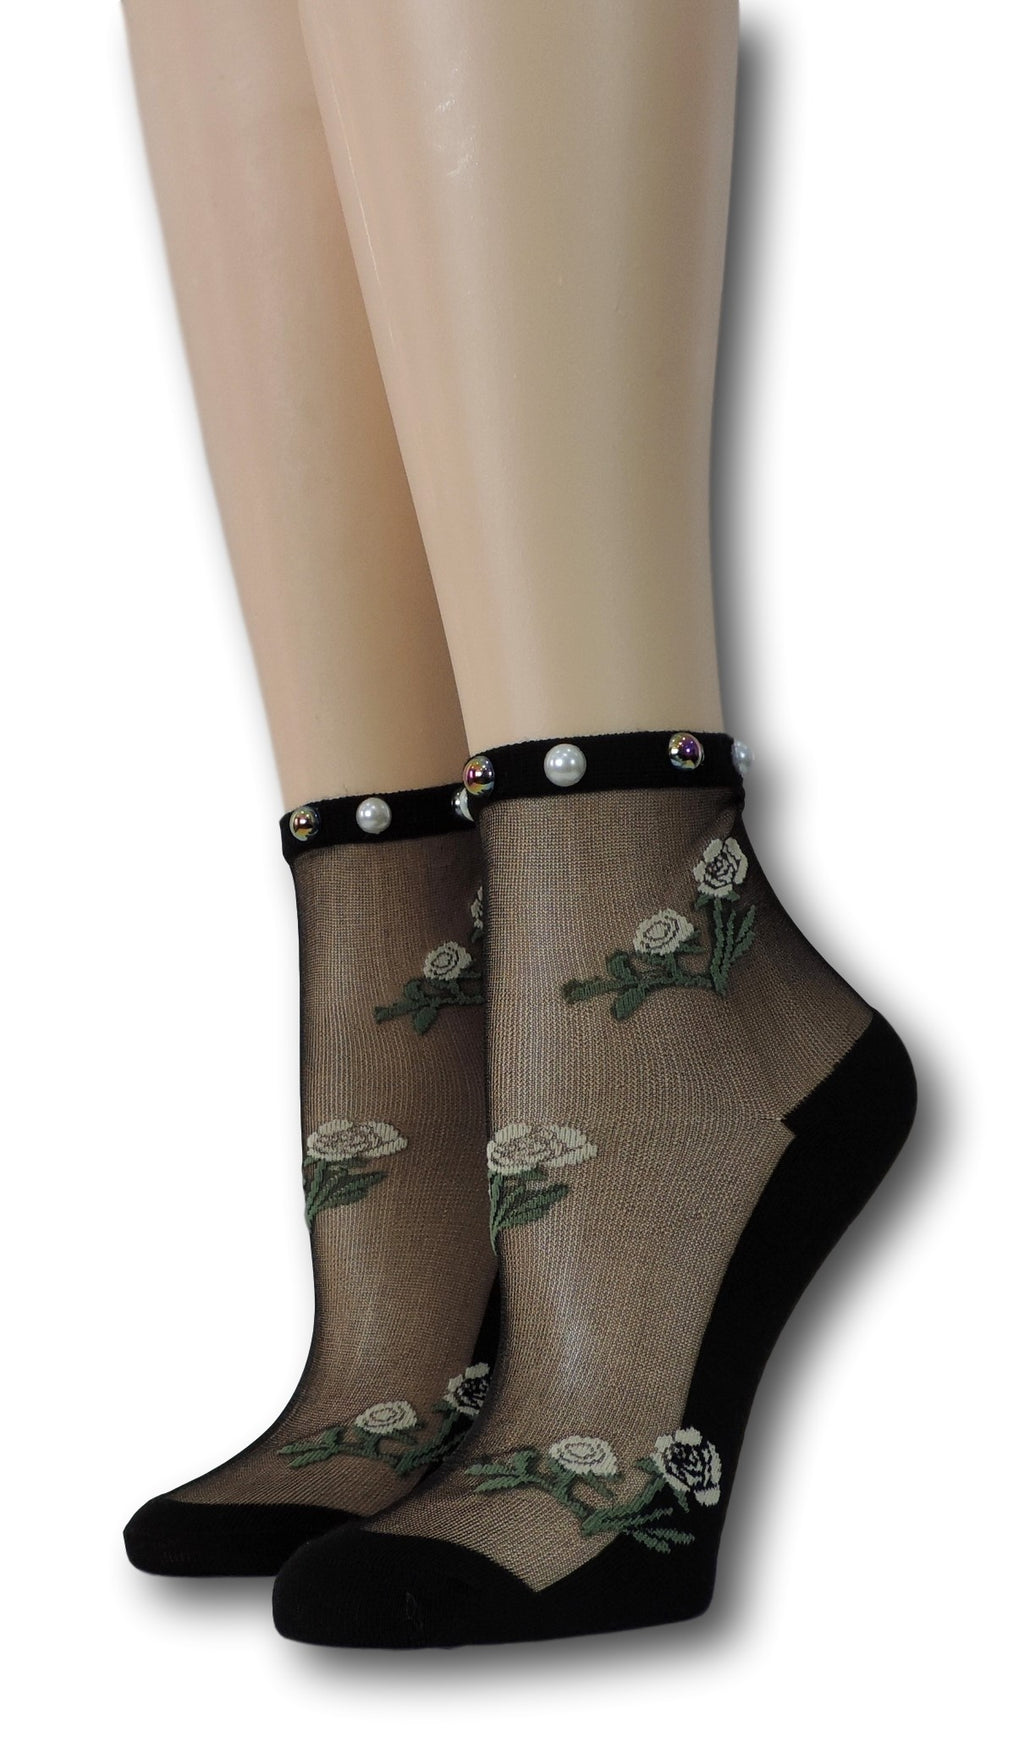 Black Floret Sheer Socks with beads